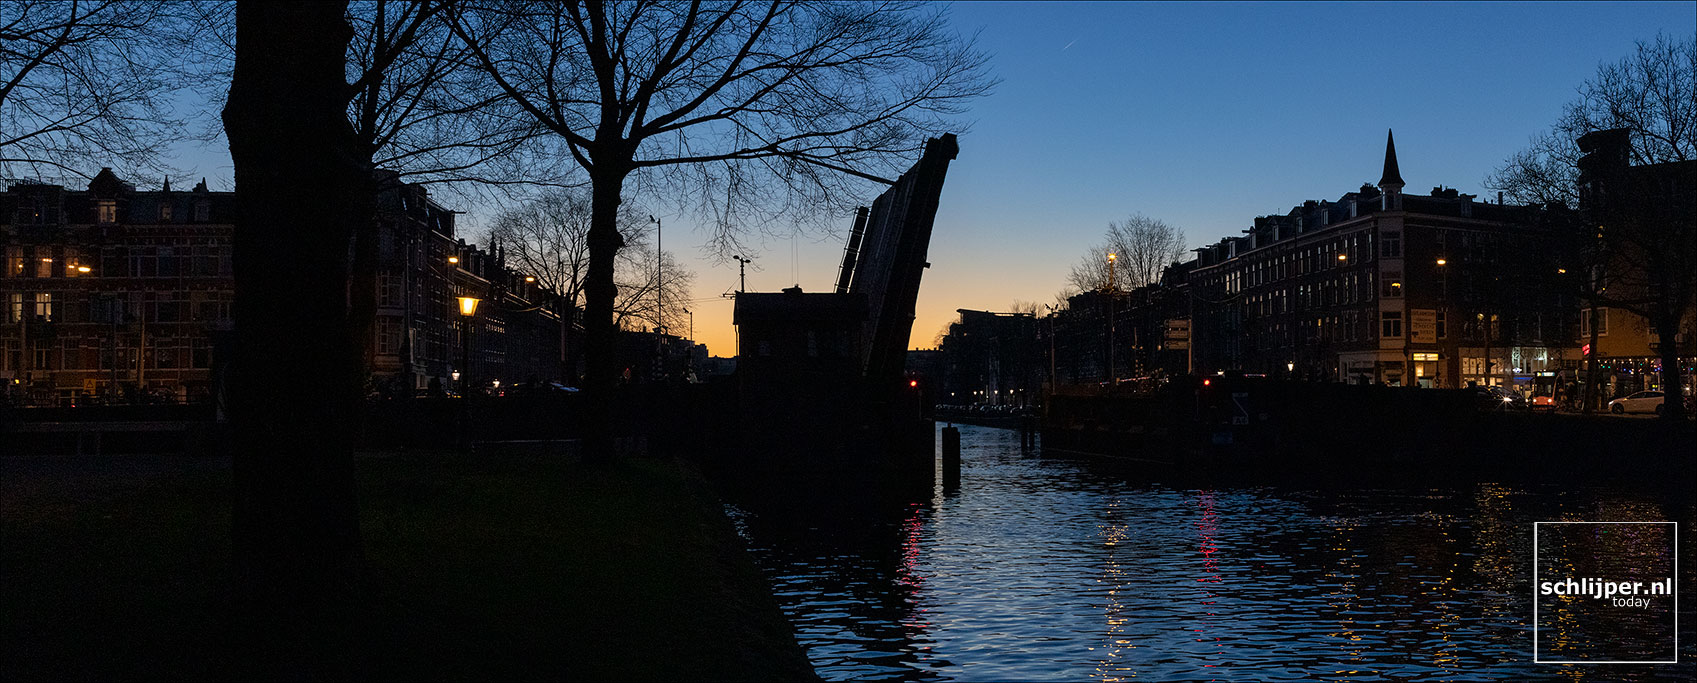 Nederland, Amsterdam, 15 februari 2019